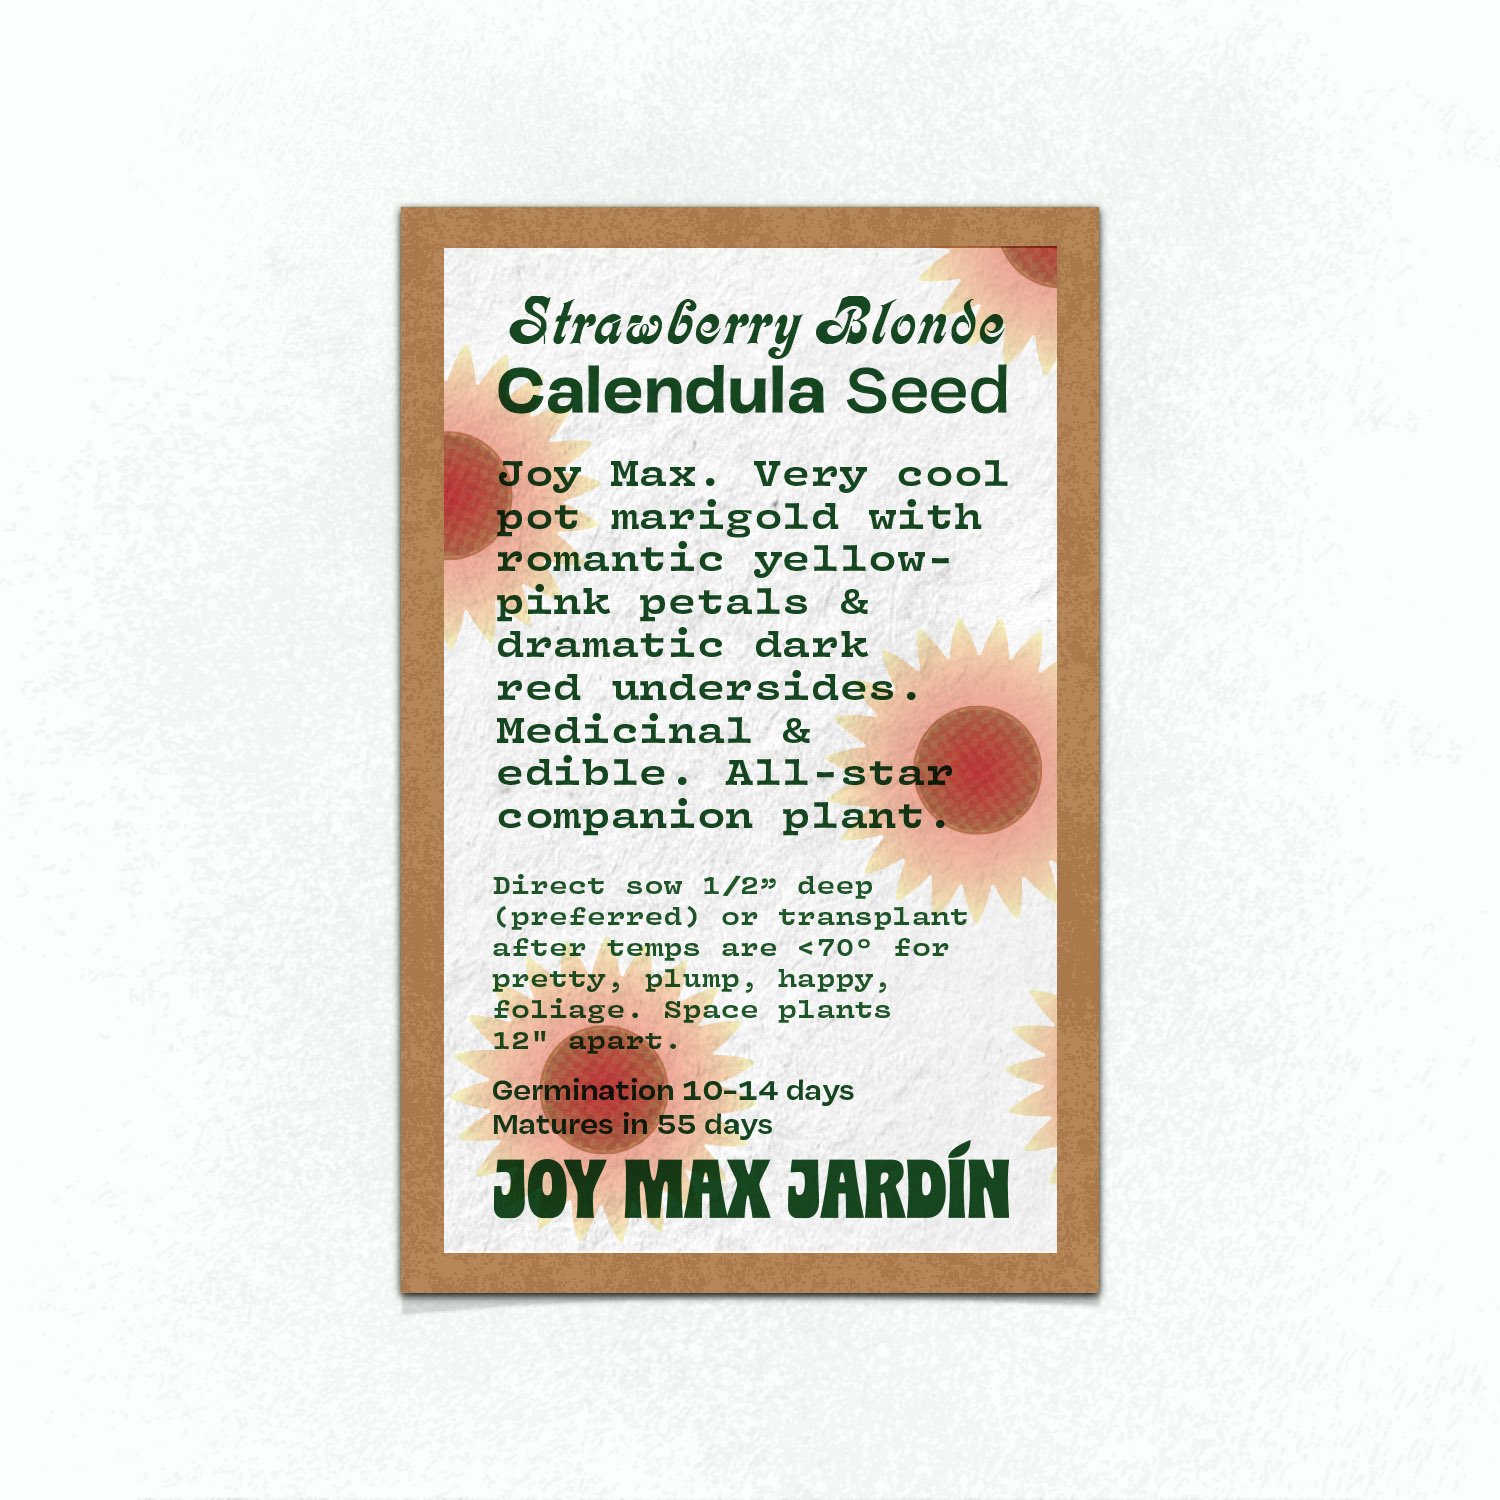 Joy Max Jardin Strawberry Blonde Calendula Seeds.jpg